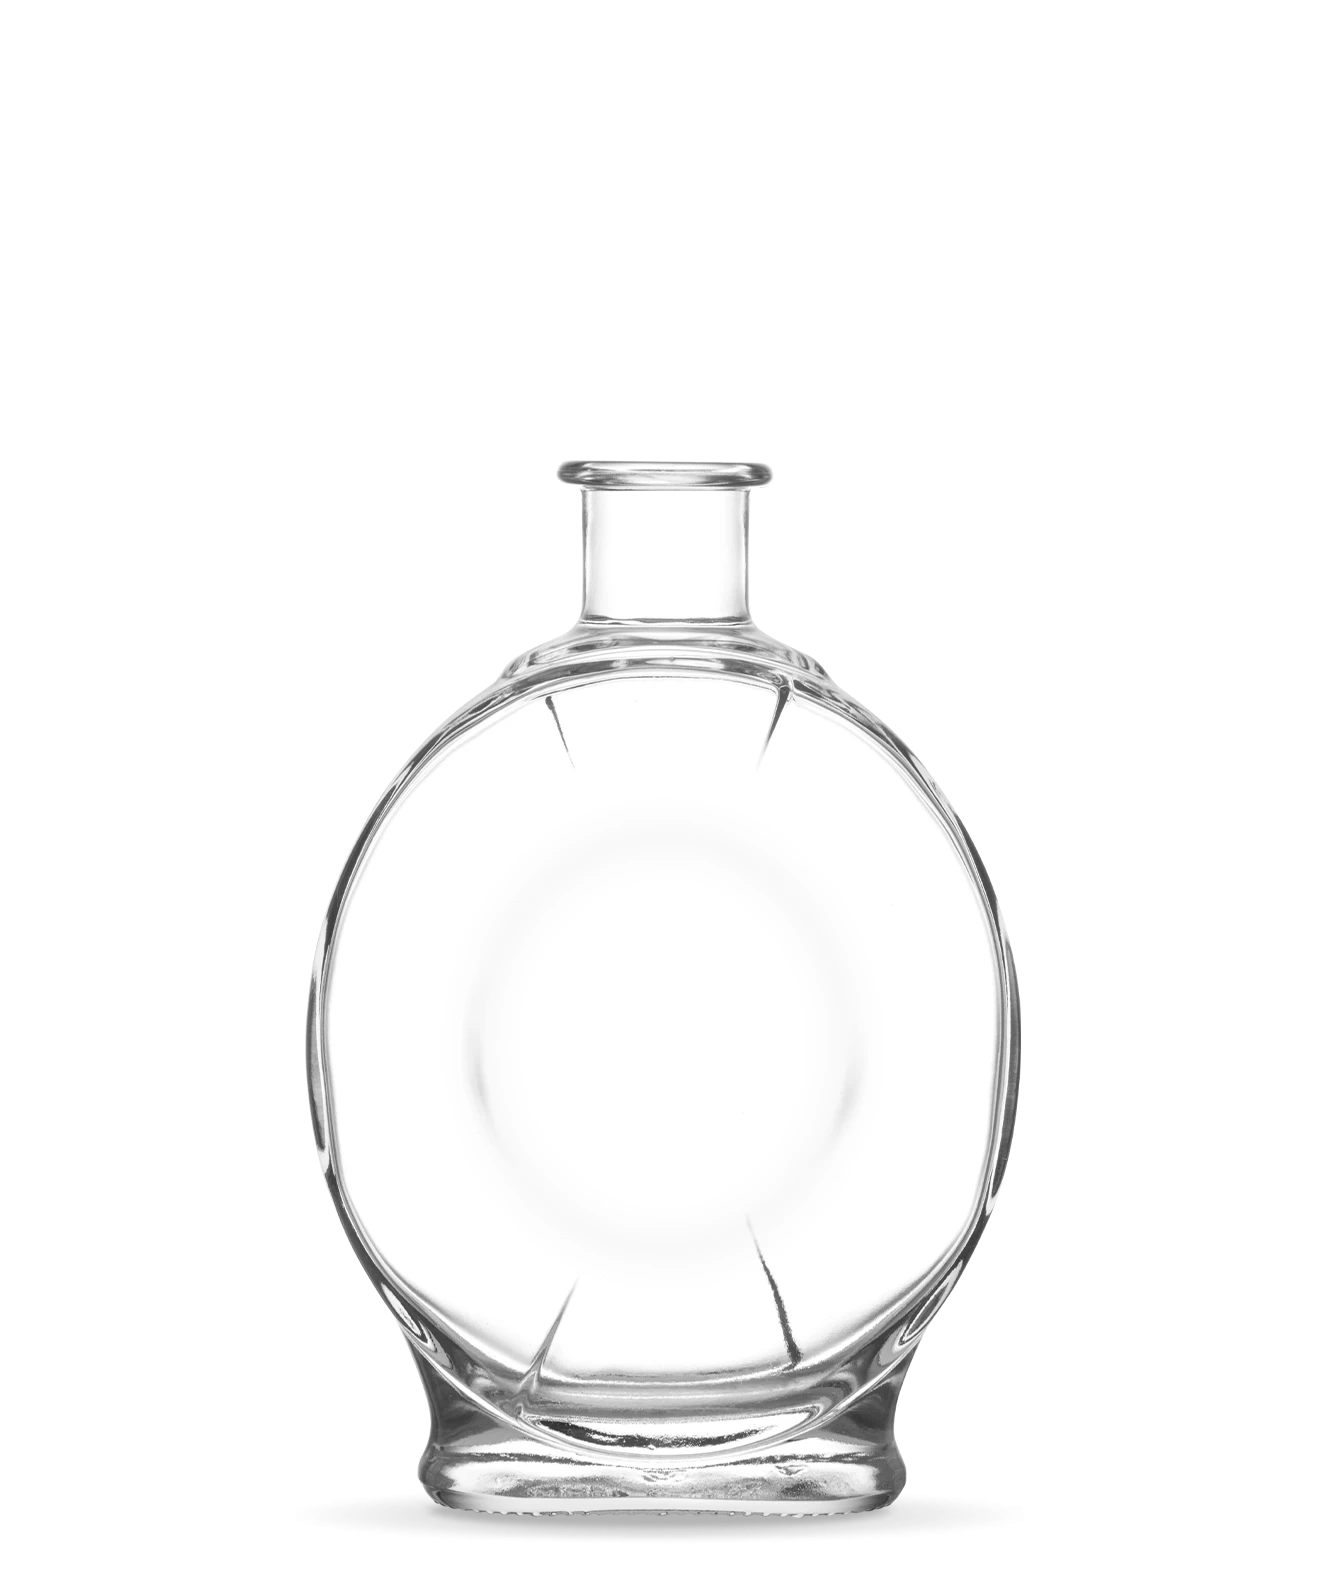 LIJEV Archive Spirits bottles Vetroelite View 1